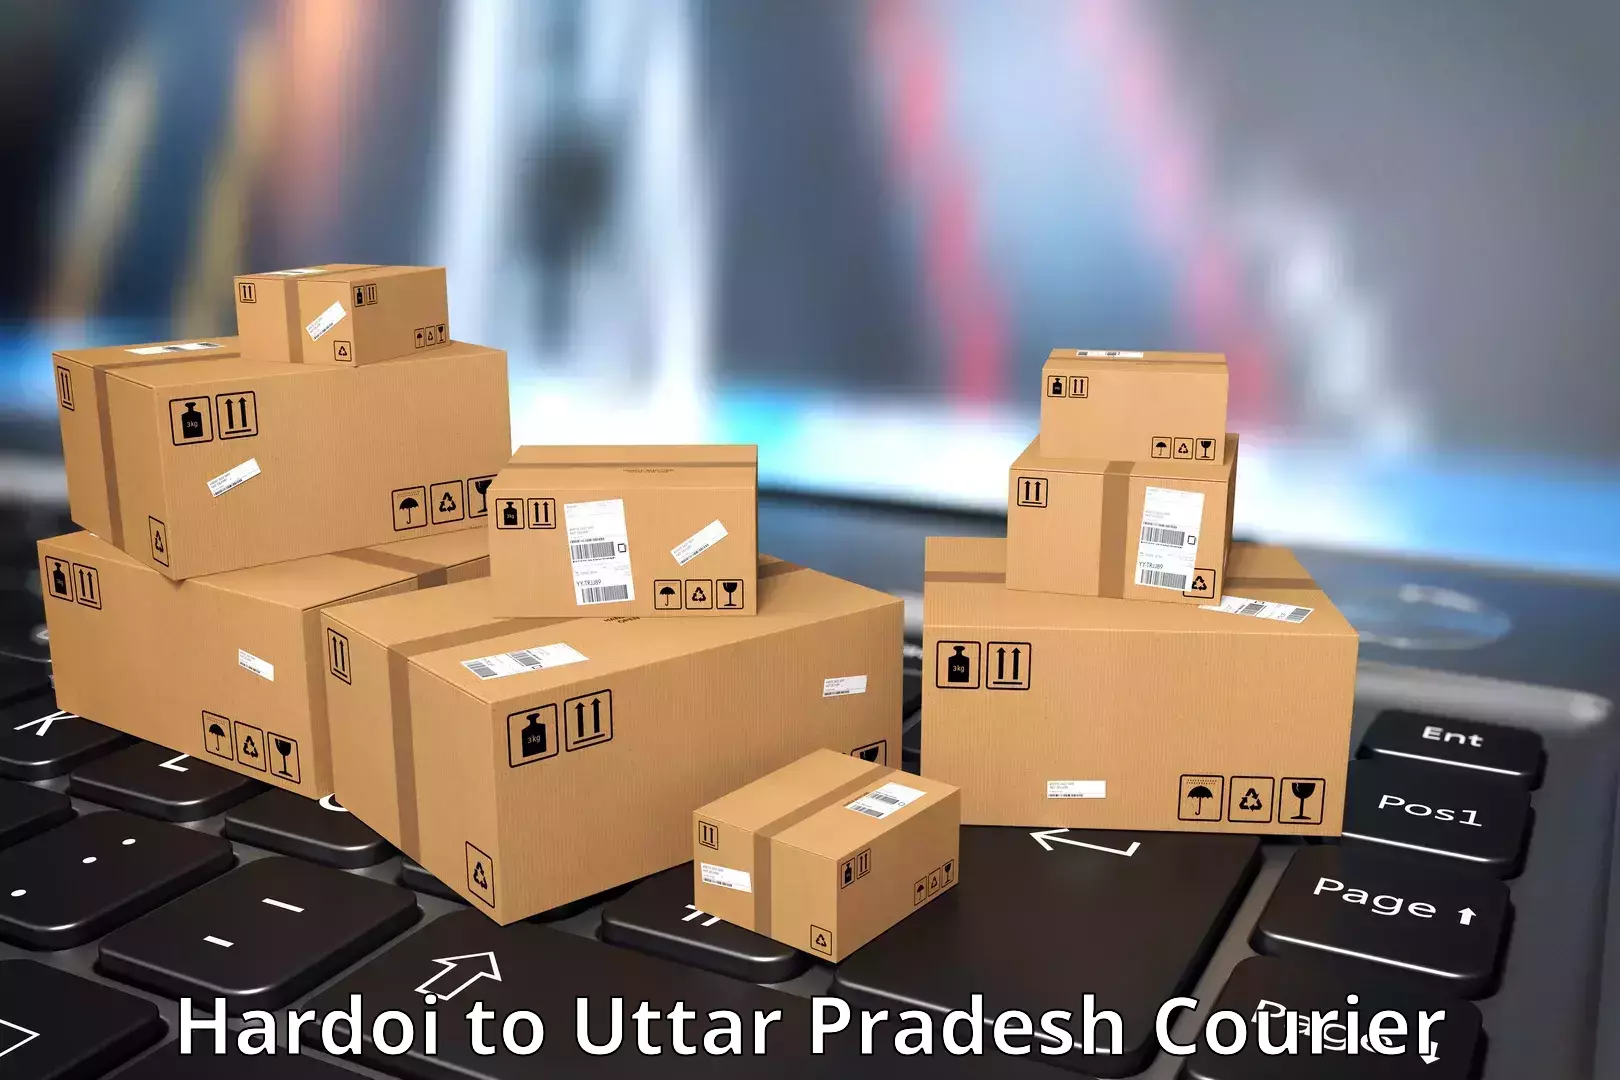 Cash on delivery service Hardoi to Ganj Dundwara